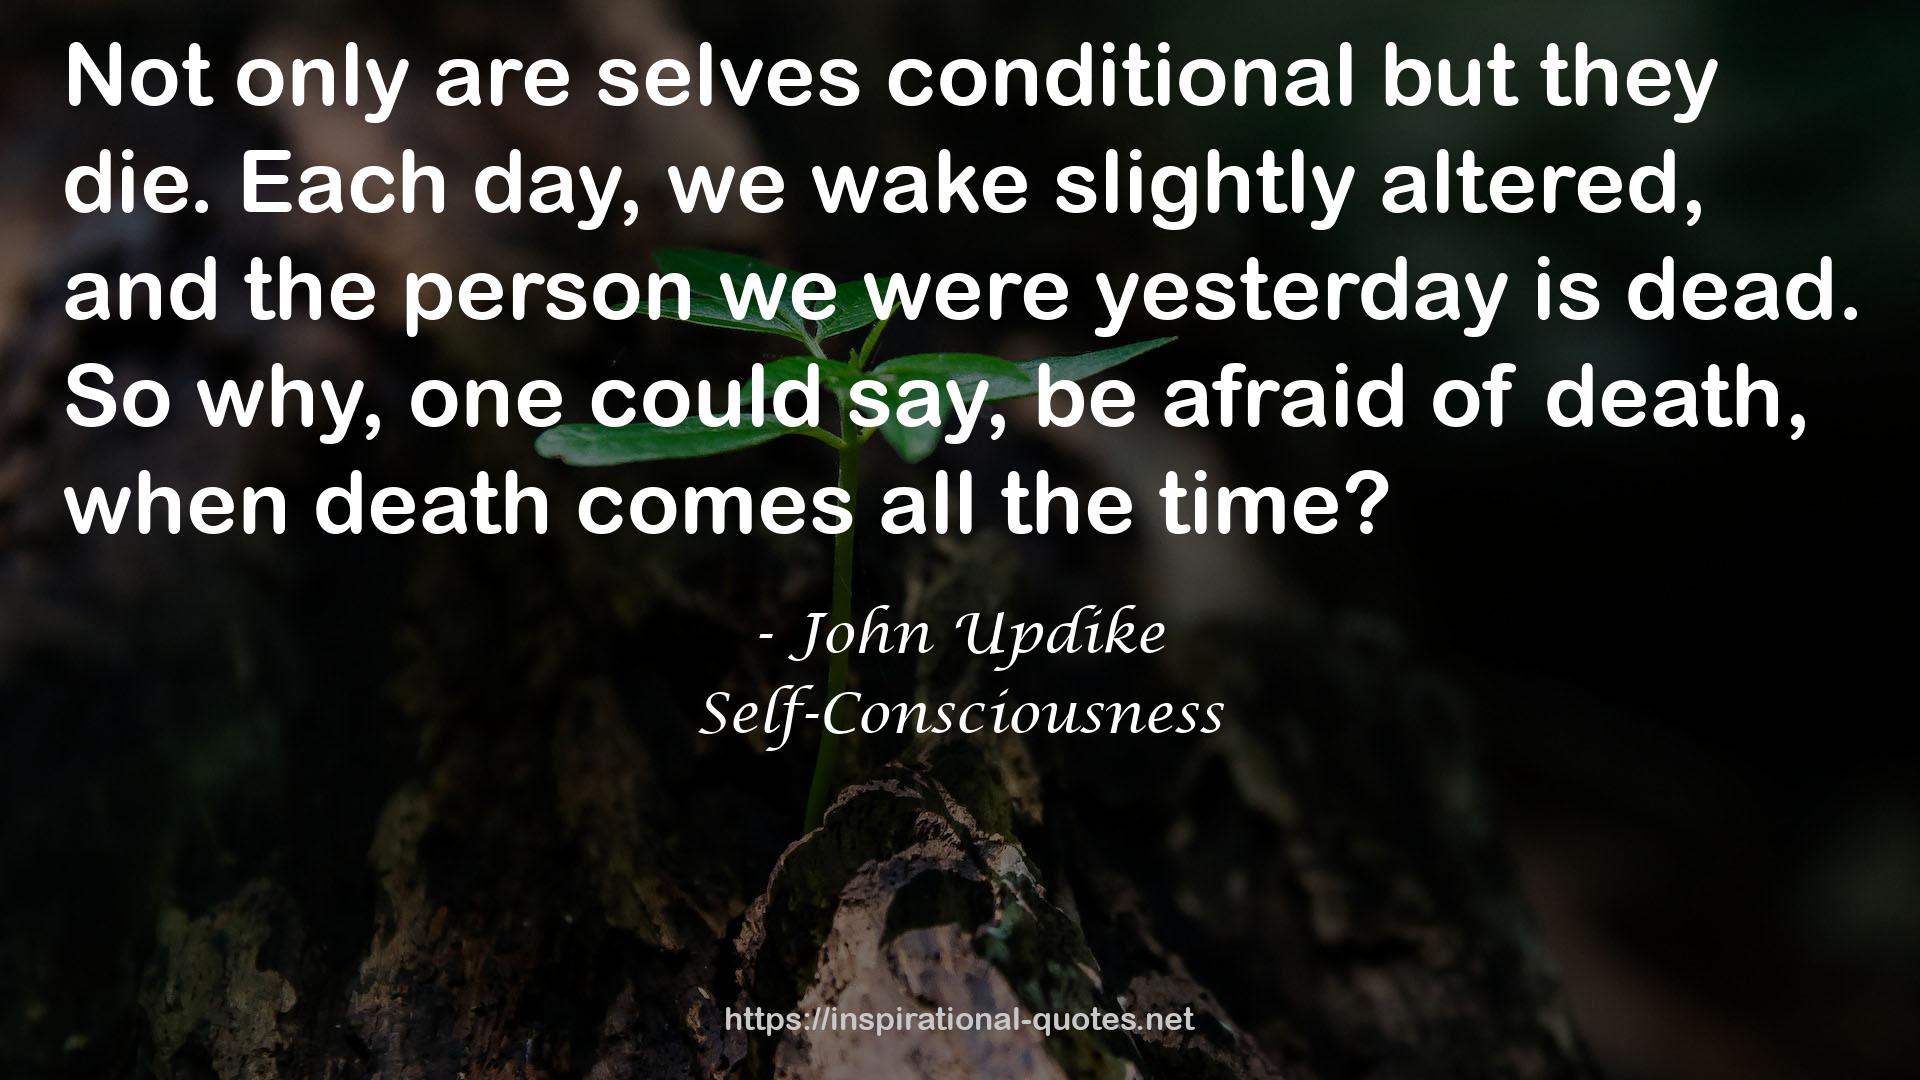 Self-Consciousness QUOTES